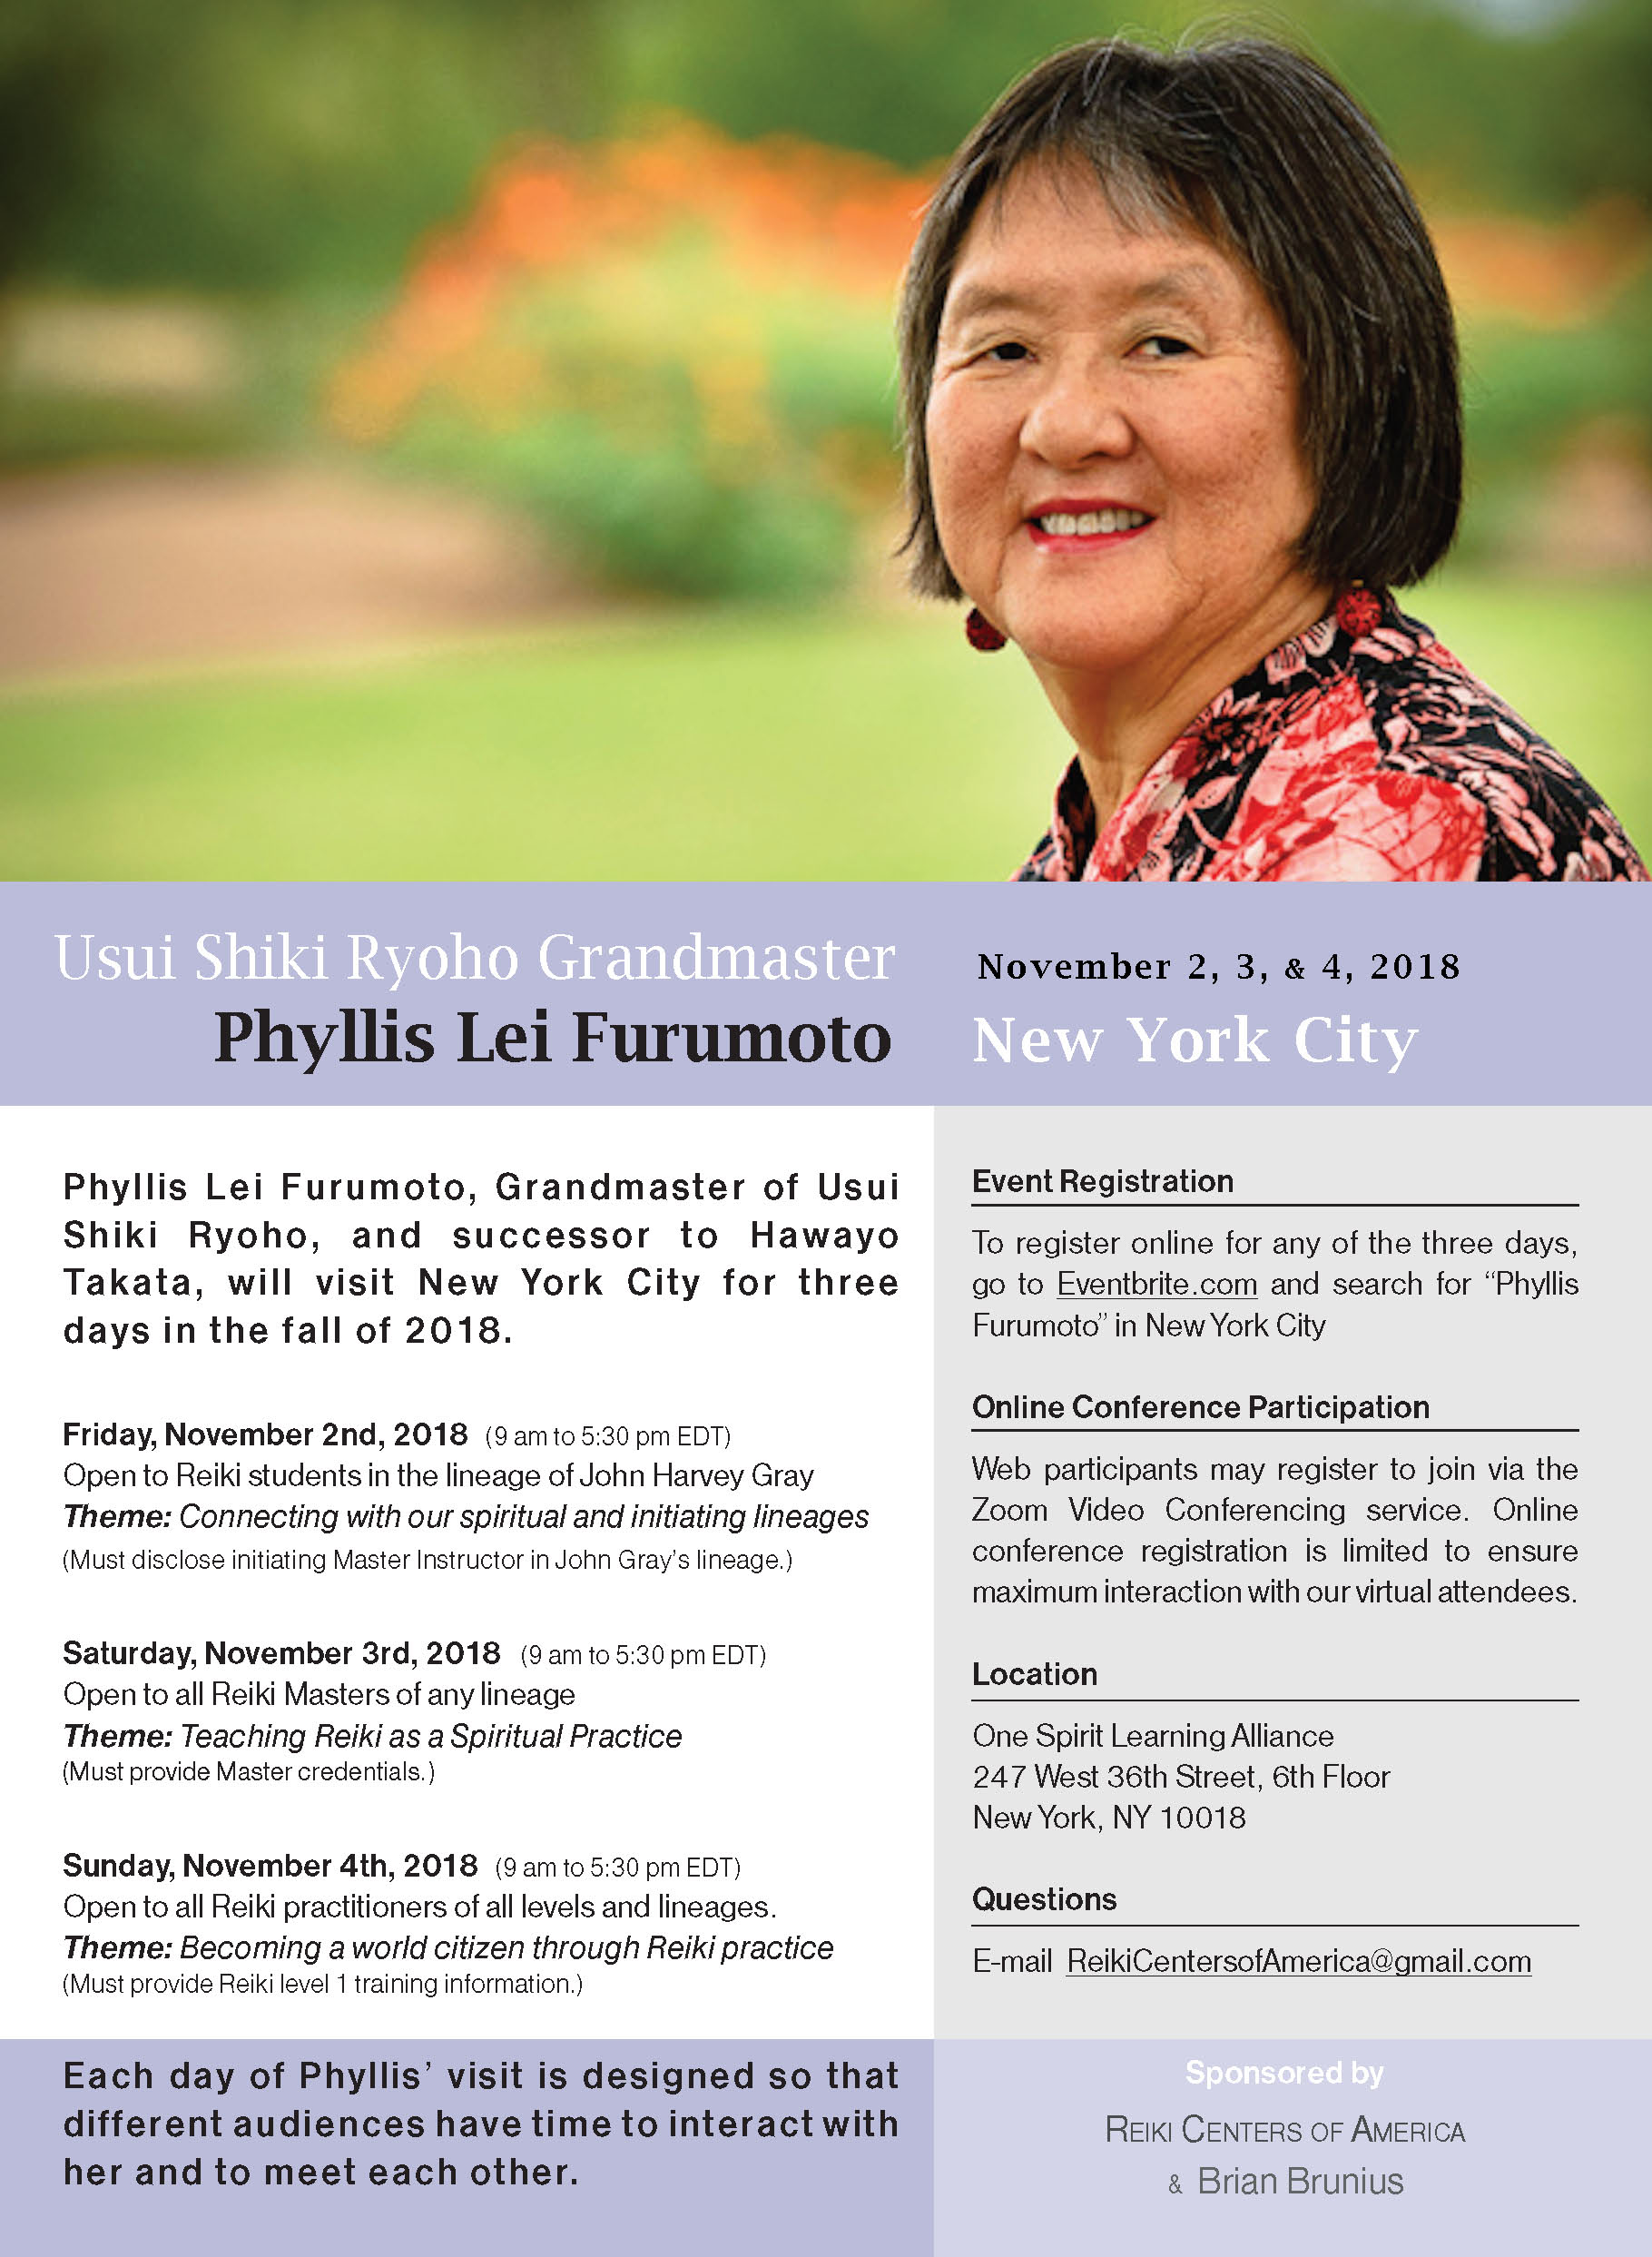 Phyllis-Furumoto-in-New-York-City-2018